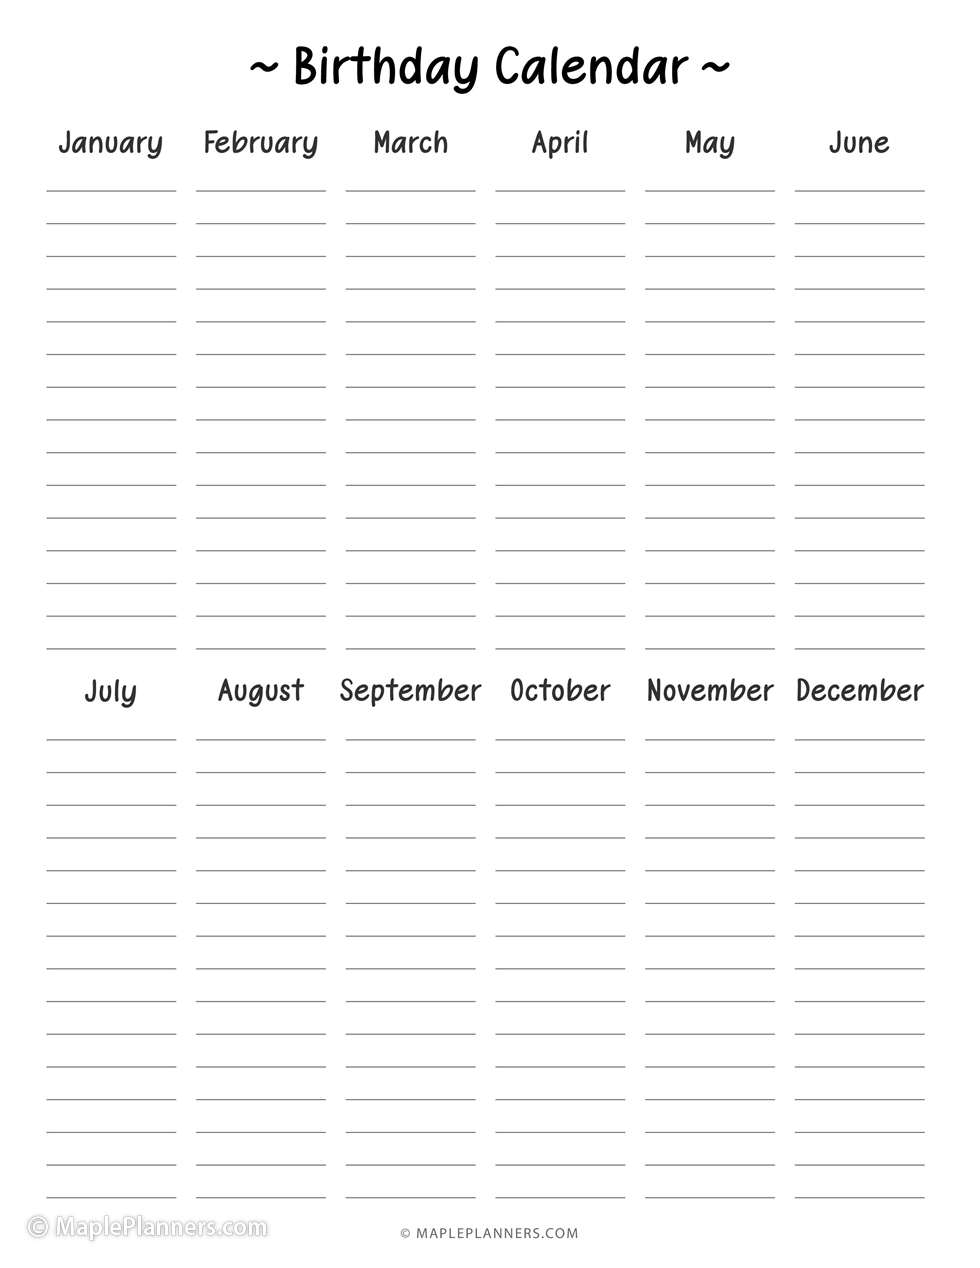 Birthday Calendar template